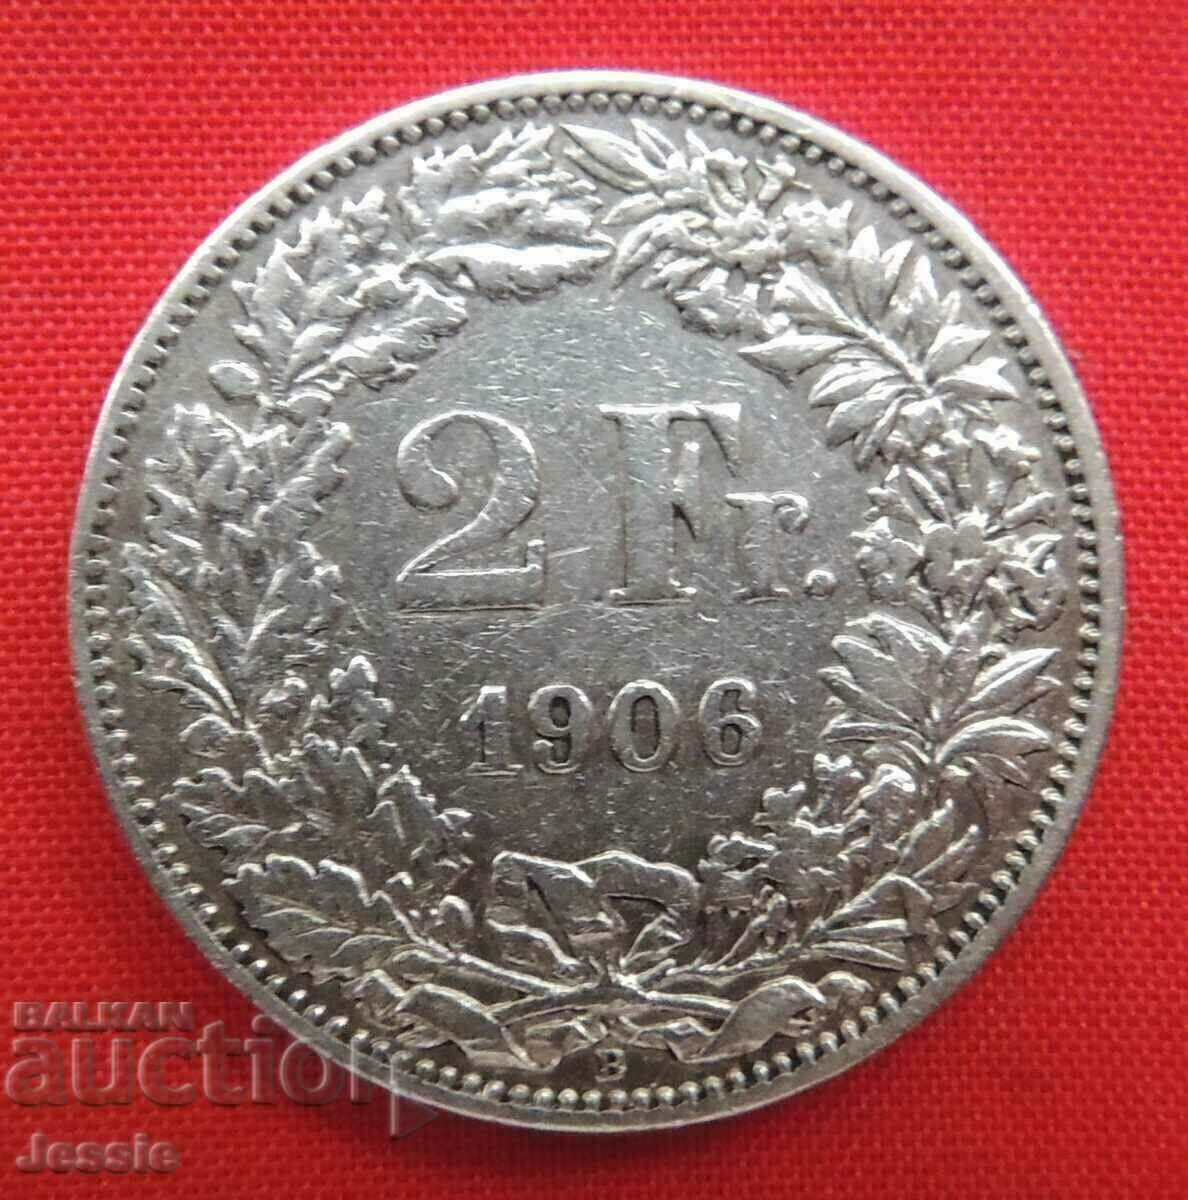 2 Francs 1906 B Switzerland Silver